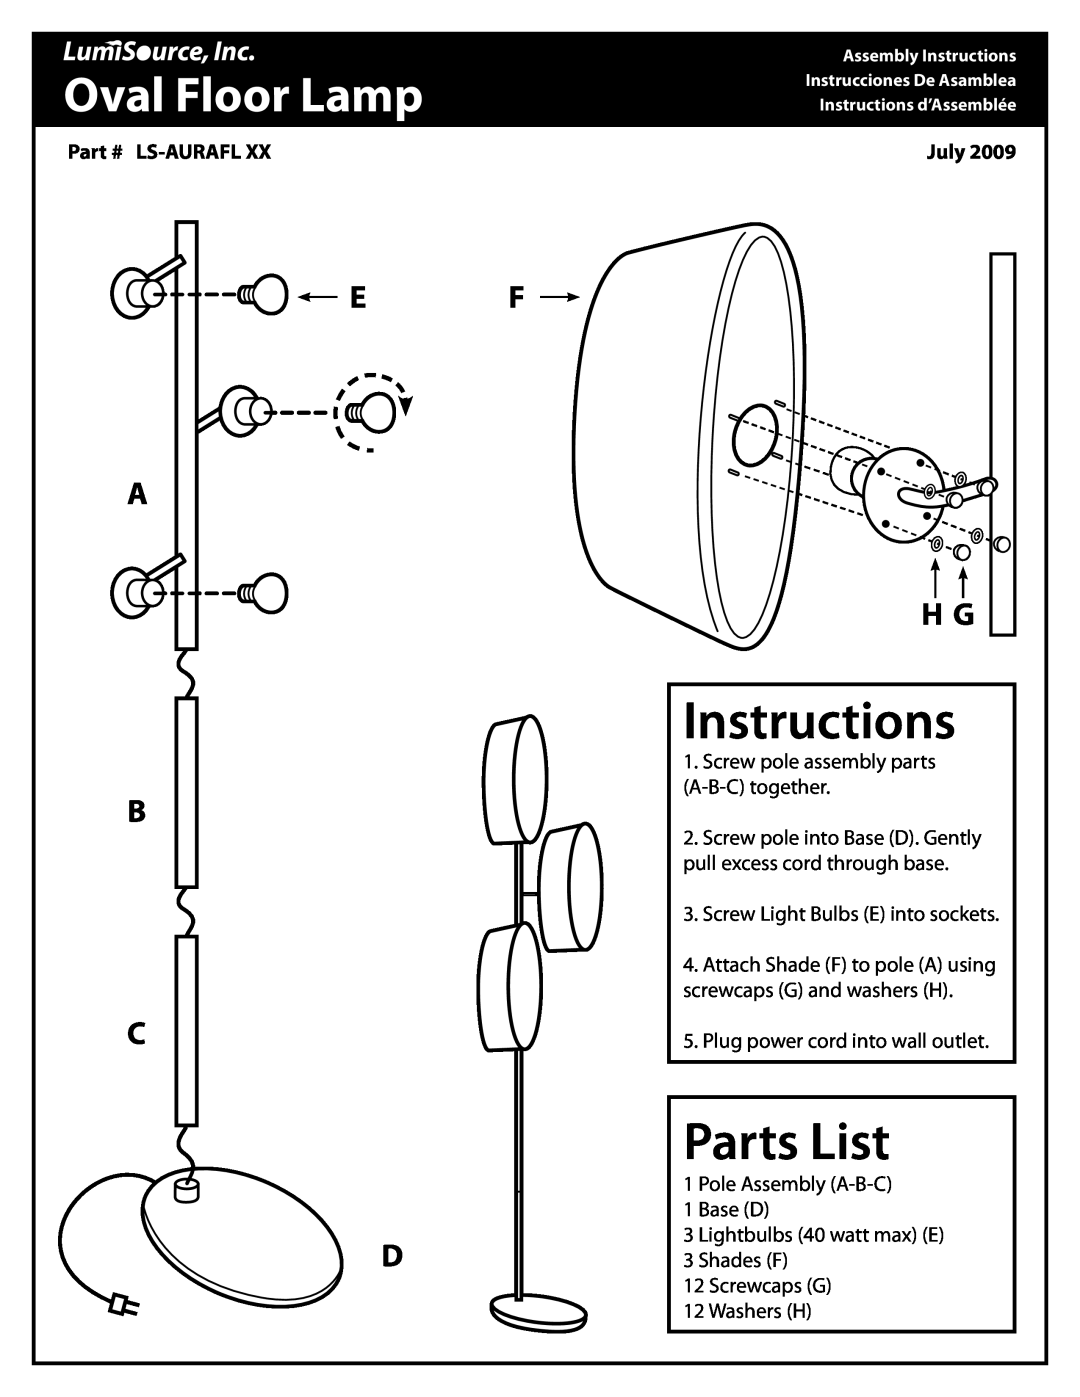 LumiSource LS-AURAFL XX manual Instructions, Parts List, Oval Floor Lamp, E F A B C D, Ls-Auraflxx, July, 12Washers H 